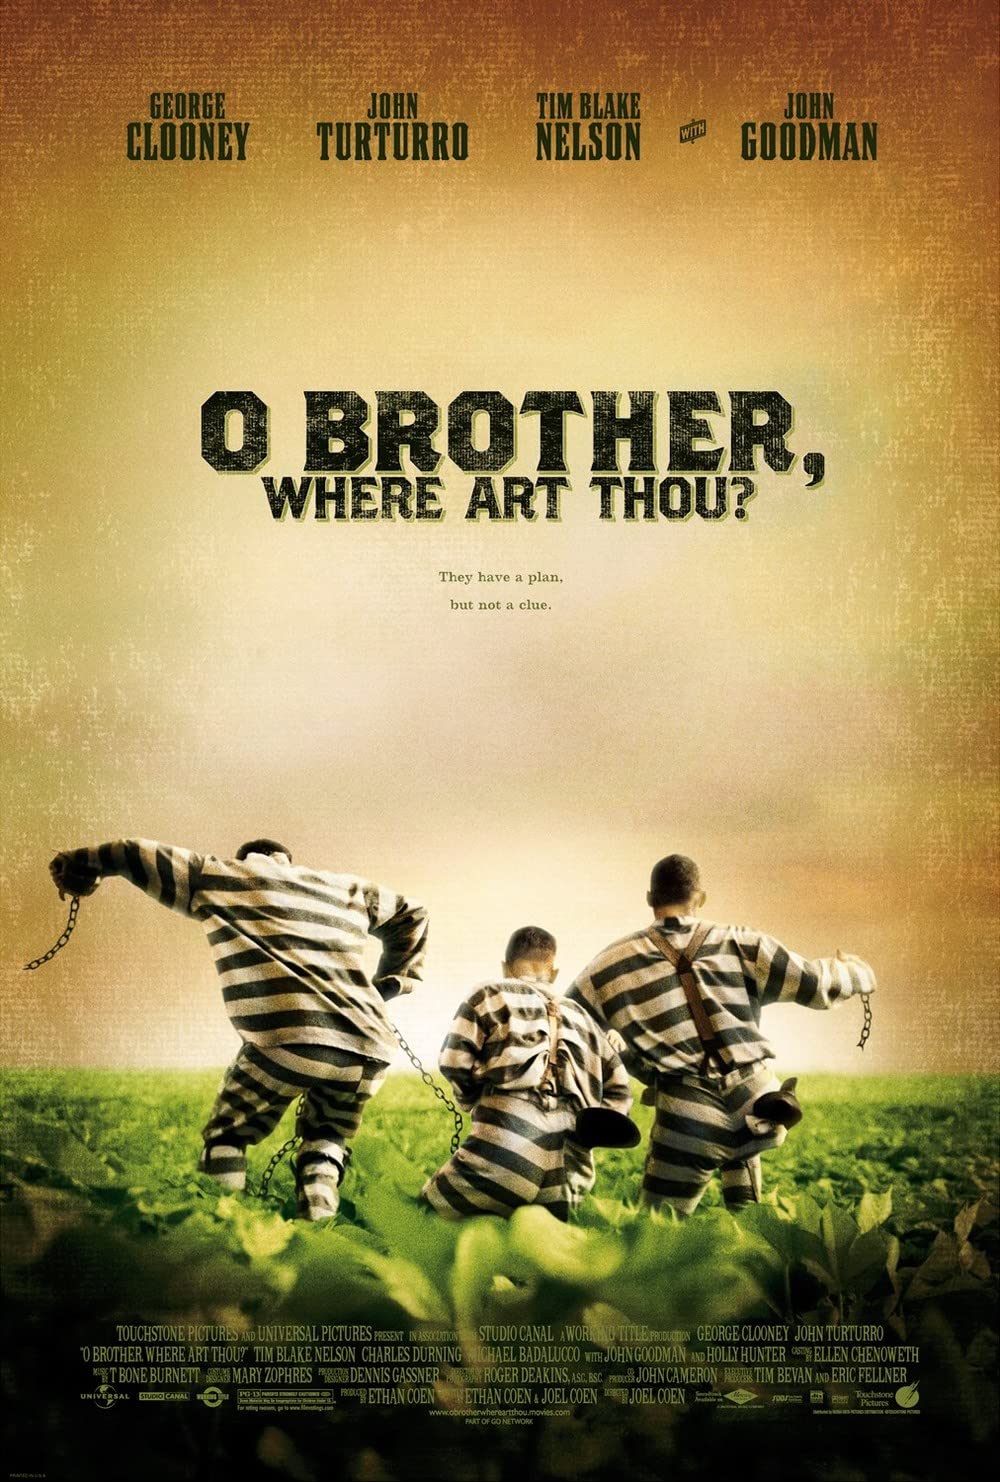 Filmbeschreibung zu O Brother, Where Art Thou? (OV)